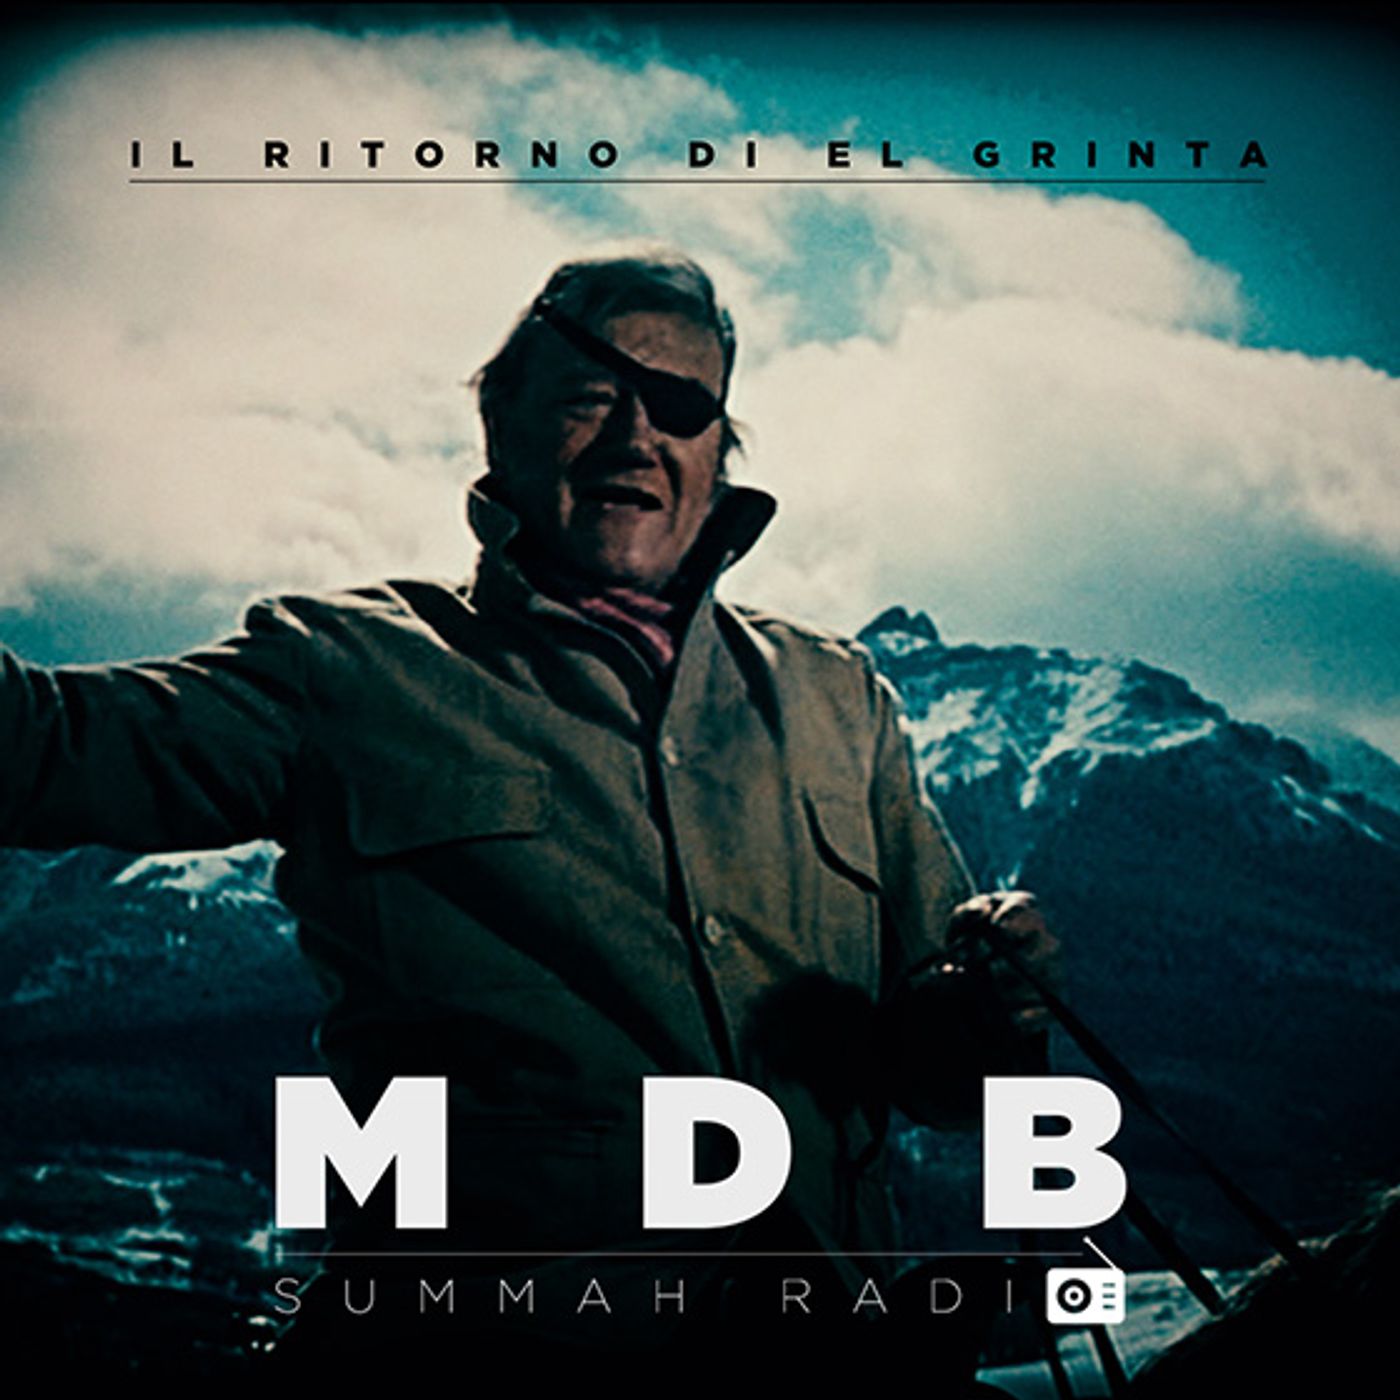 MDB Summah Radio ep 2 “Il ritorno del Grinta”